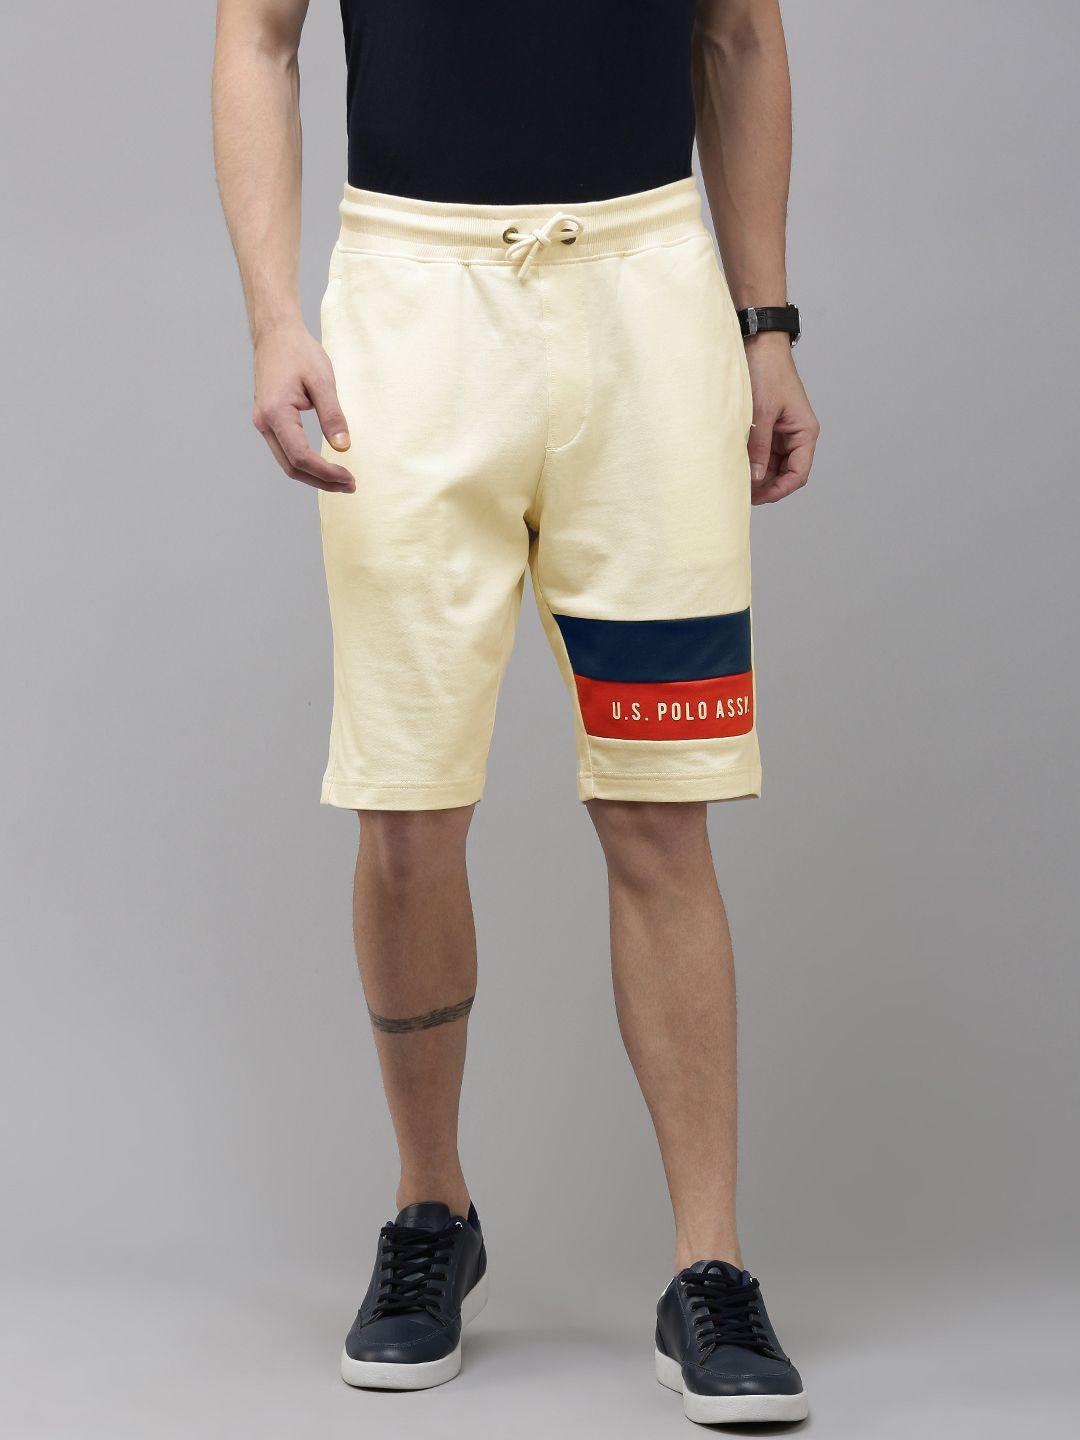 u.s. polo assn. denim co. men typography printed shorts